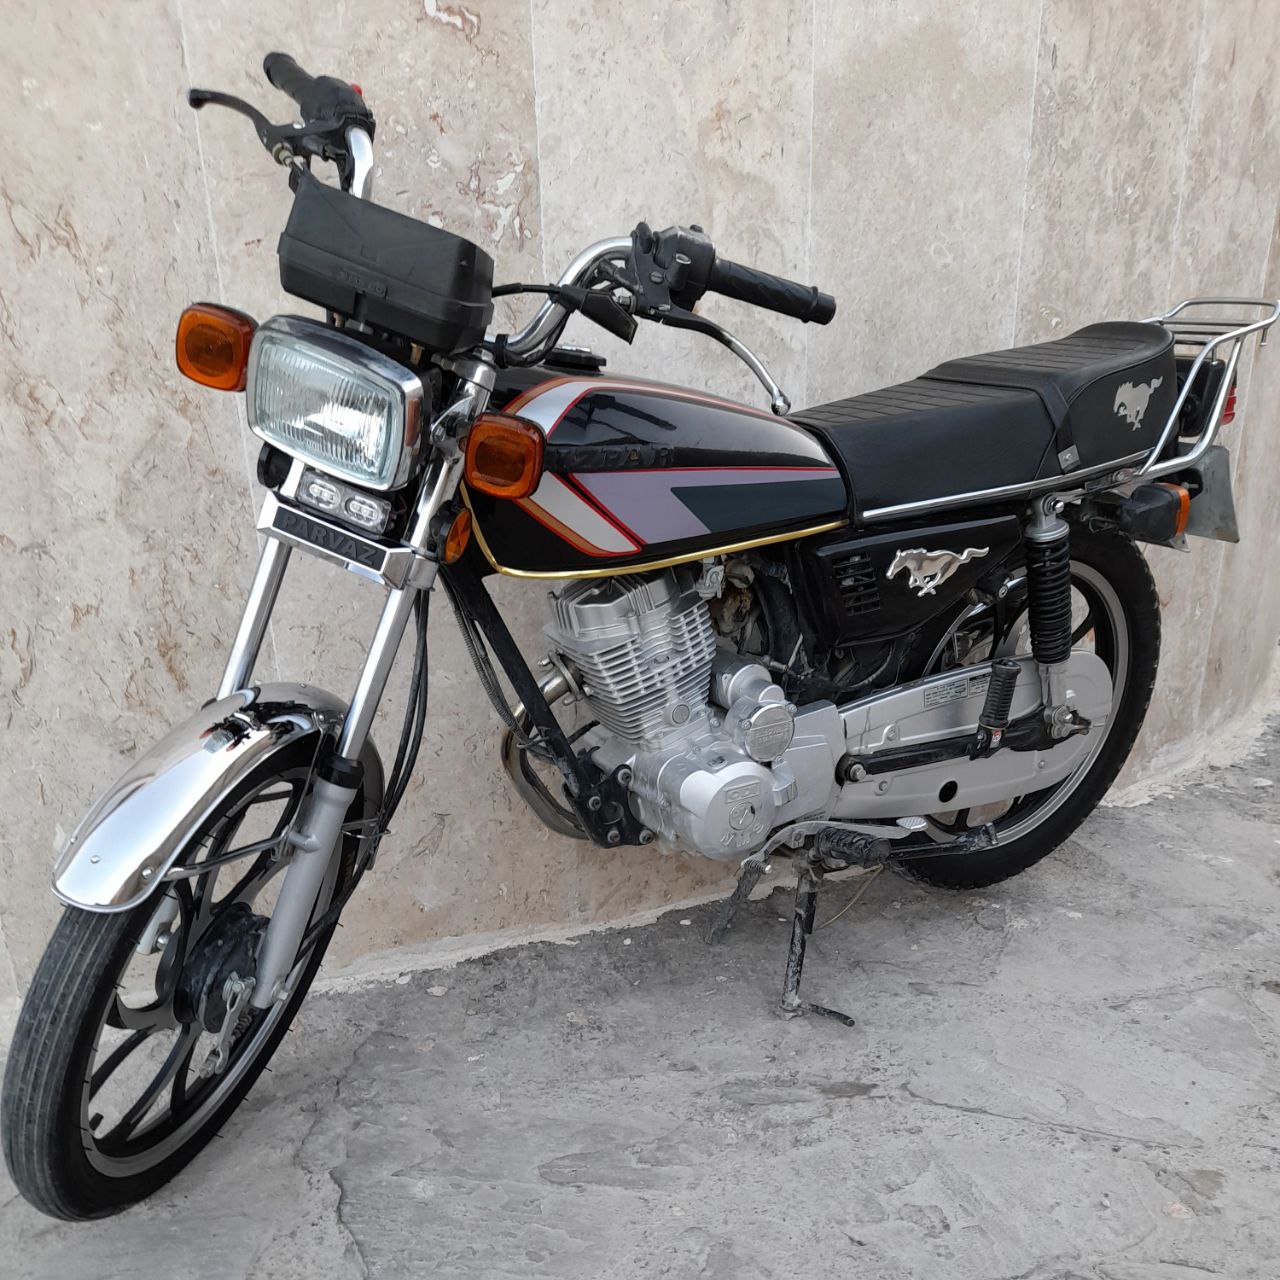 موتورسیکلت 95